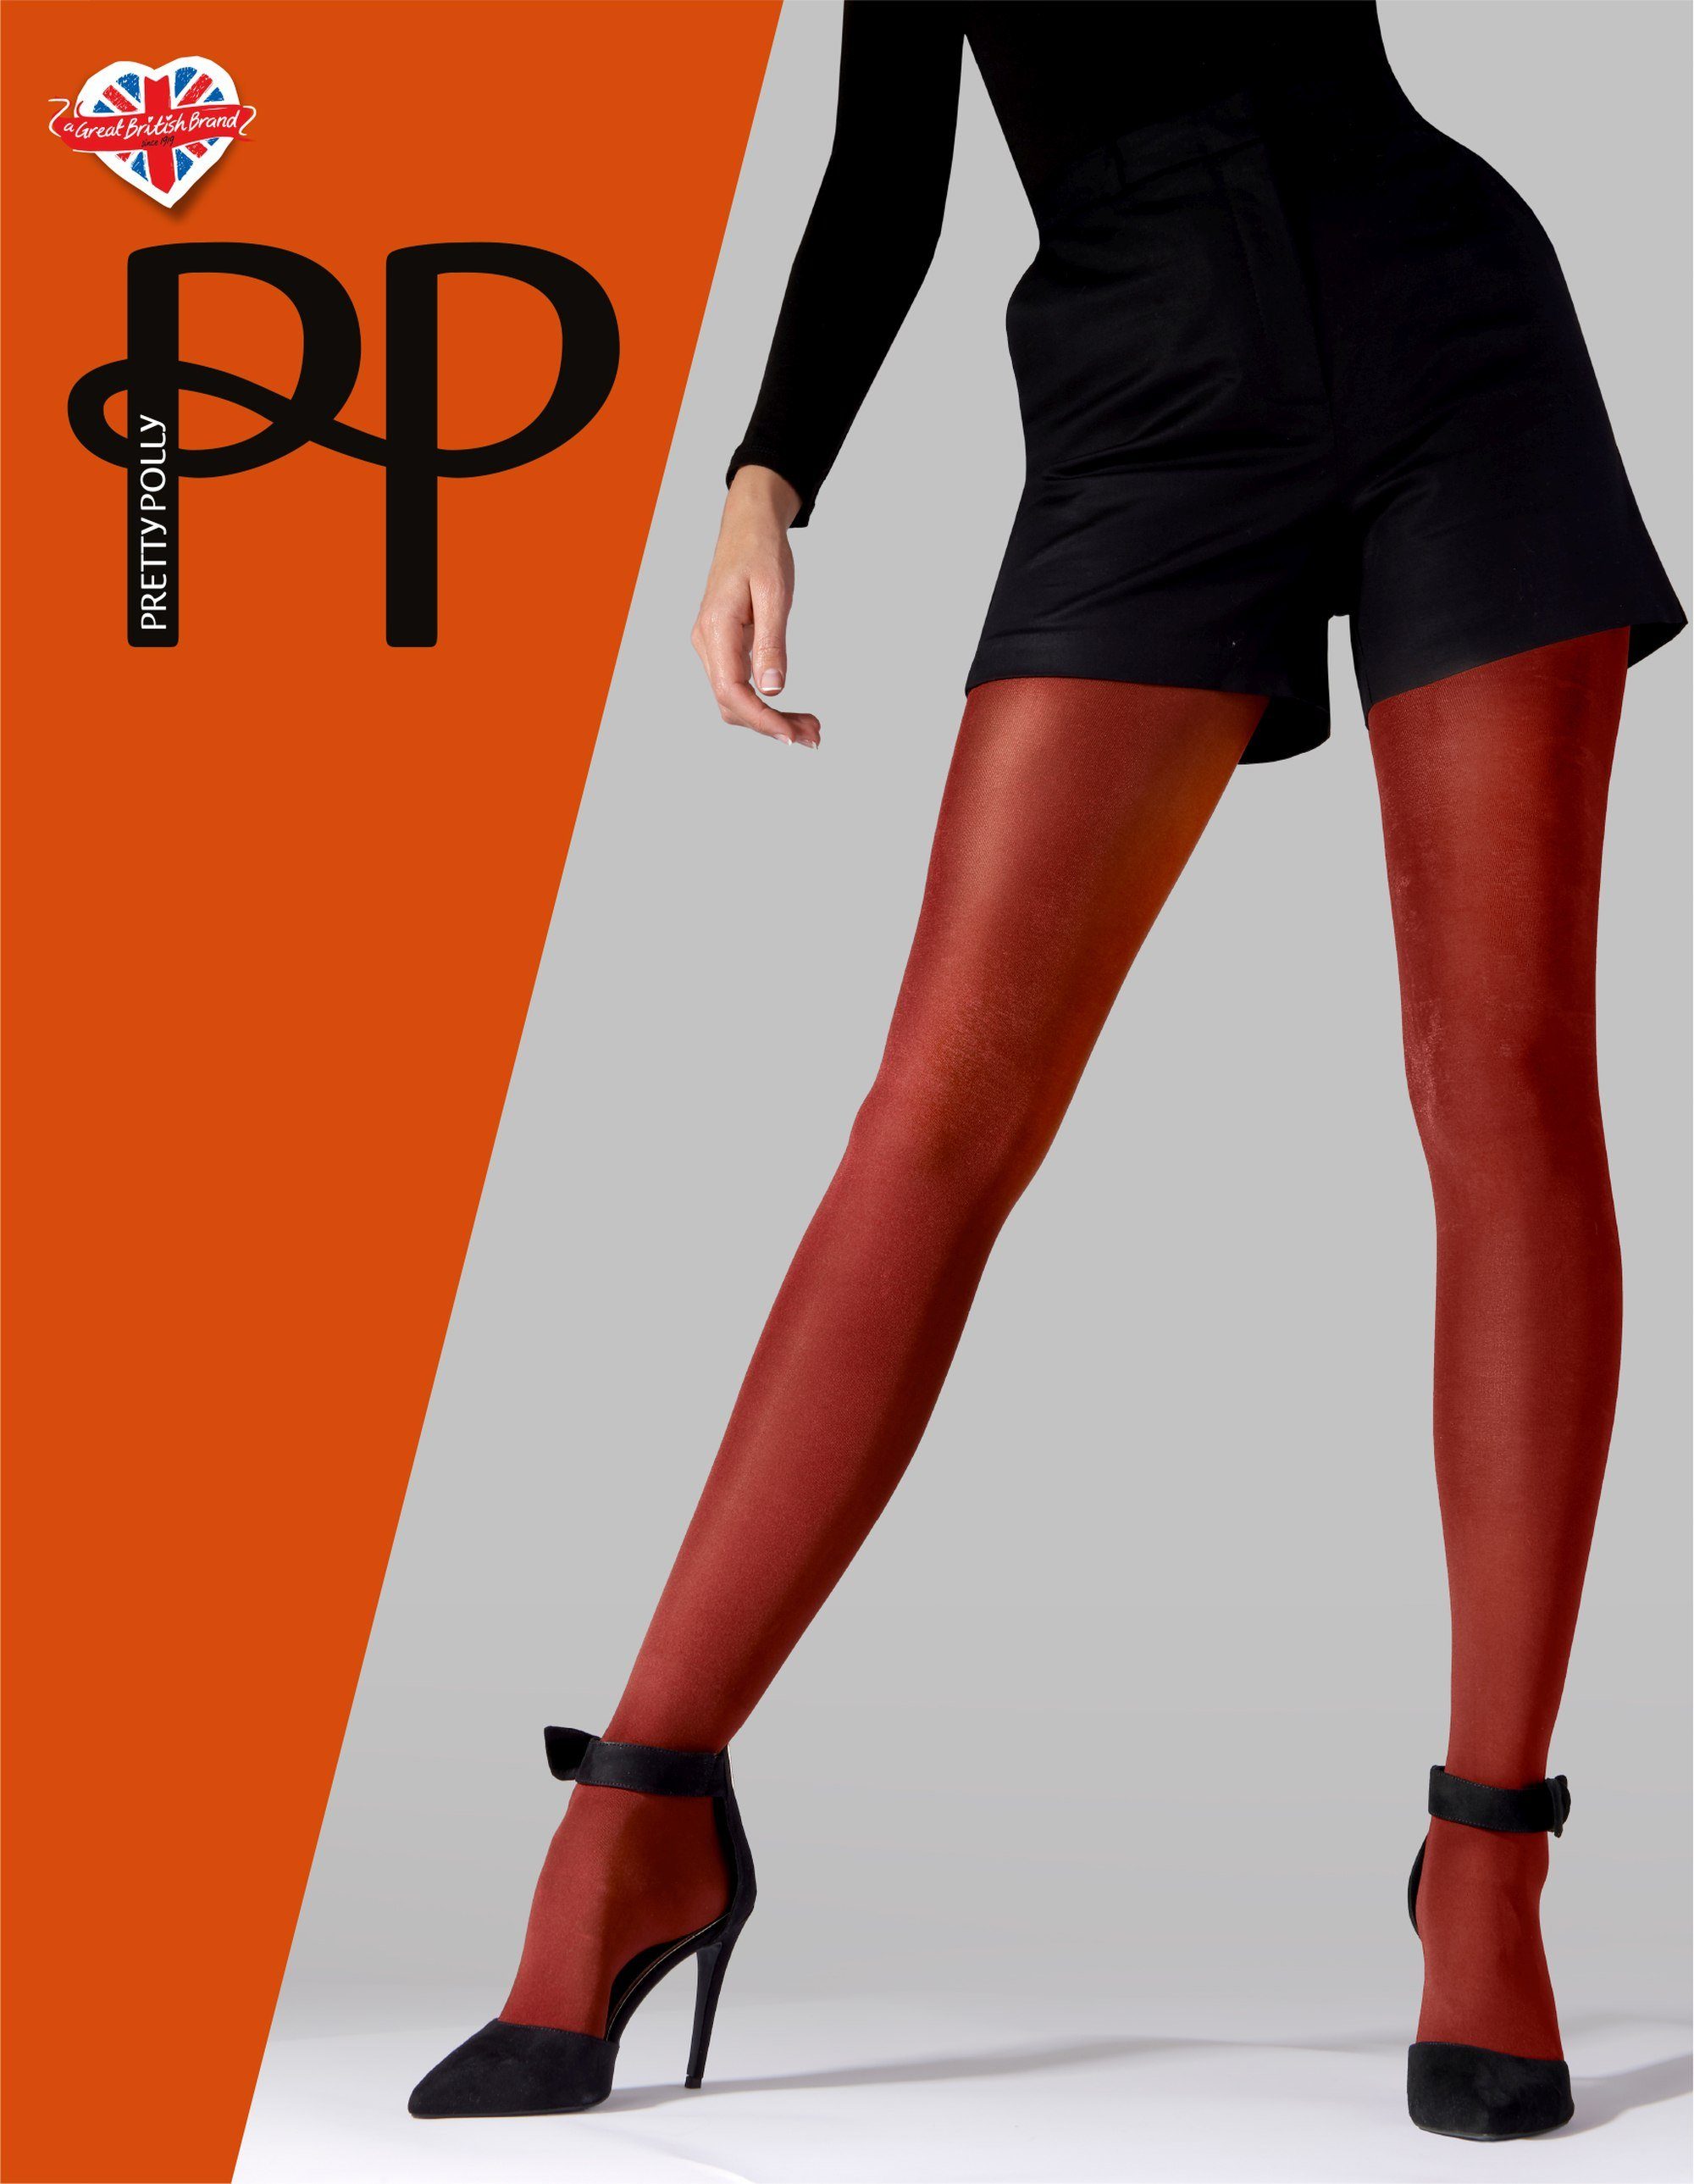 Pretty Polly Feinstrumpfhose Premium Fashion Satin Opaque Tights 60 DEN (Strumpfhose 1 St. glatt) ohne Naht